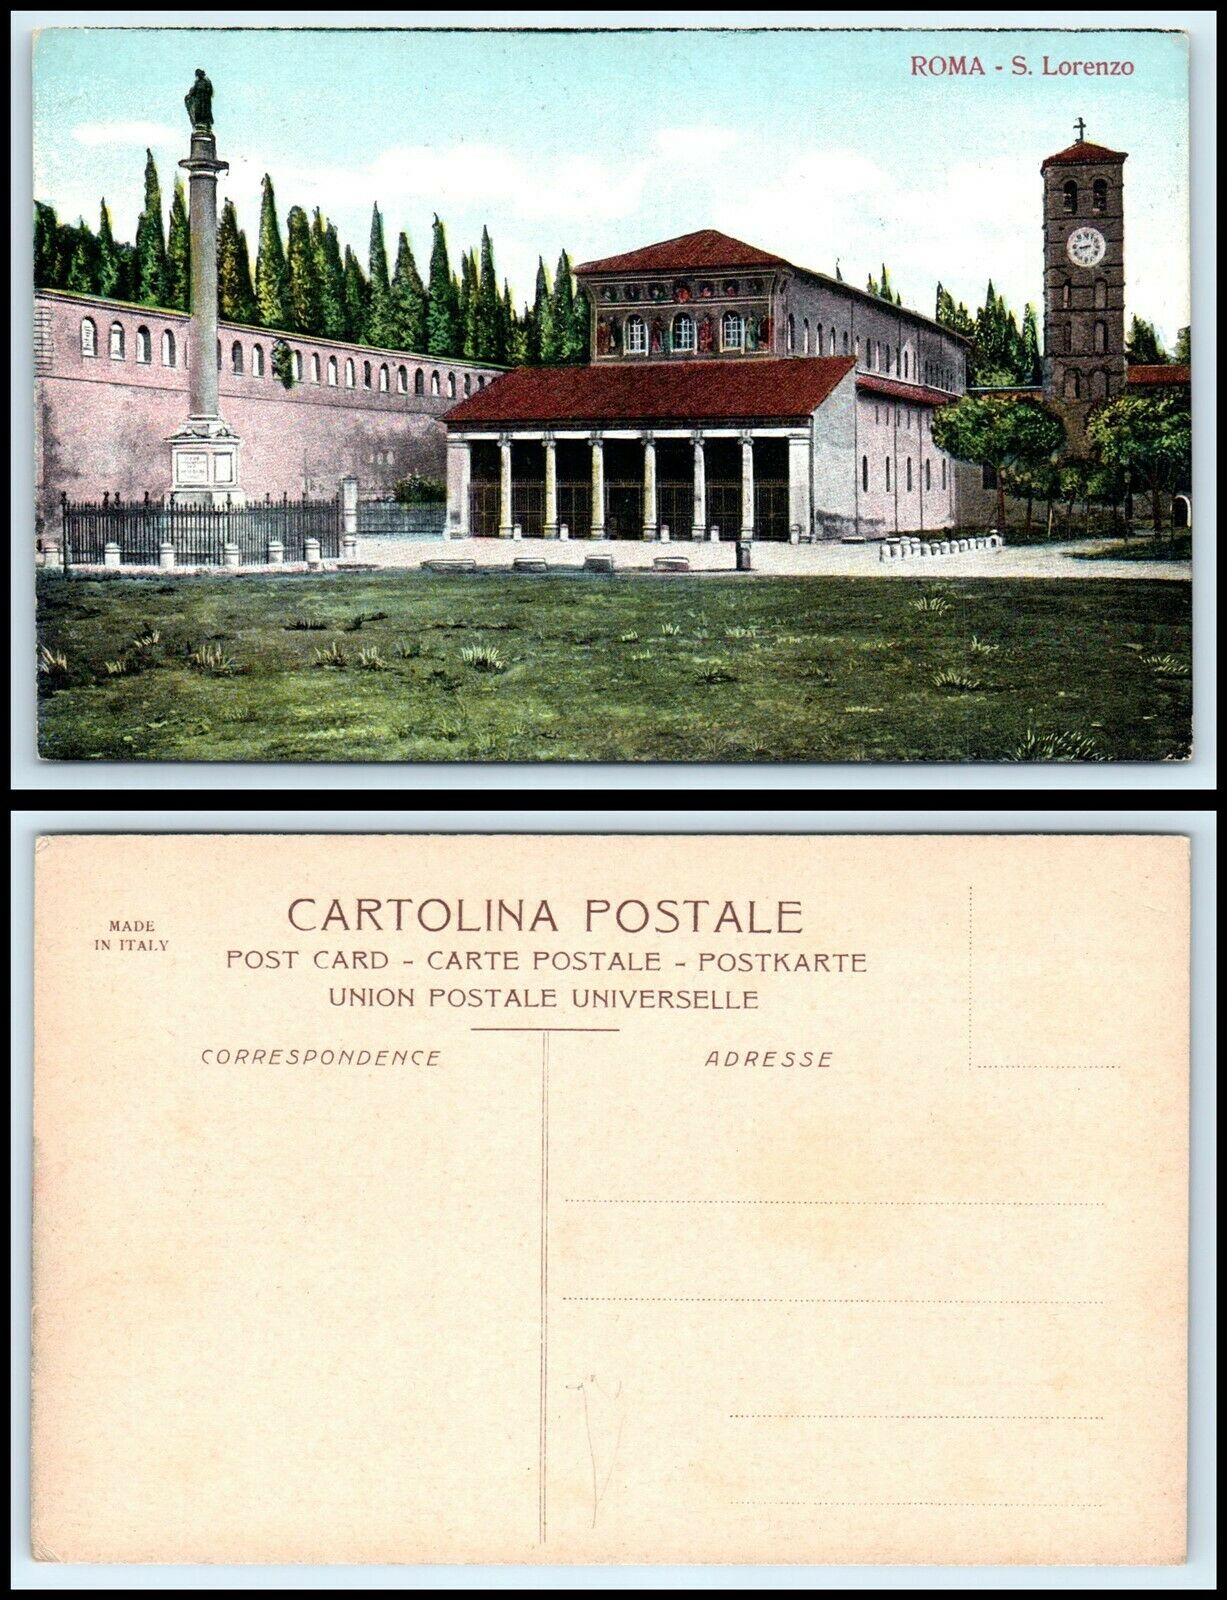 Italy Postcard - Rome, S. Lorenzo R1